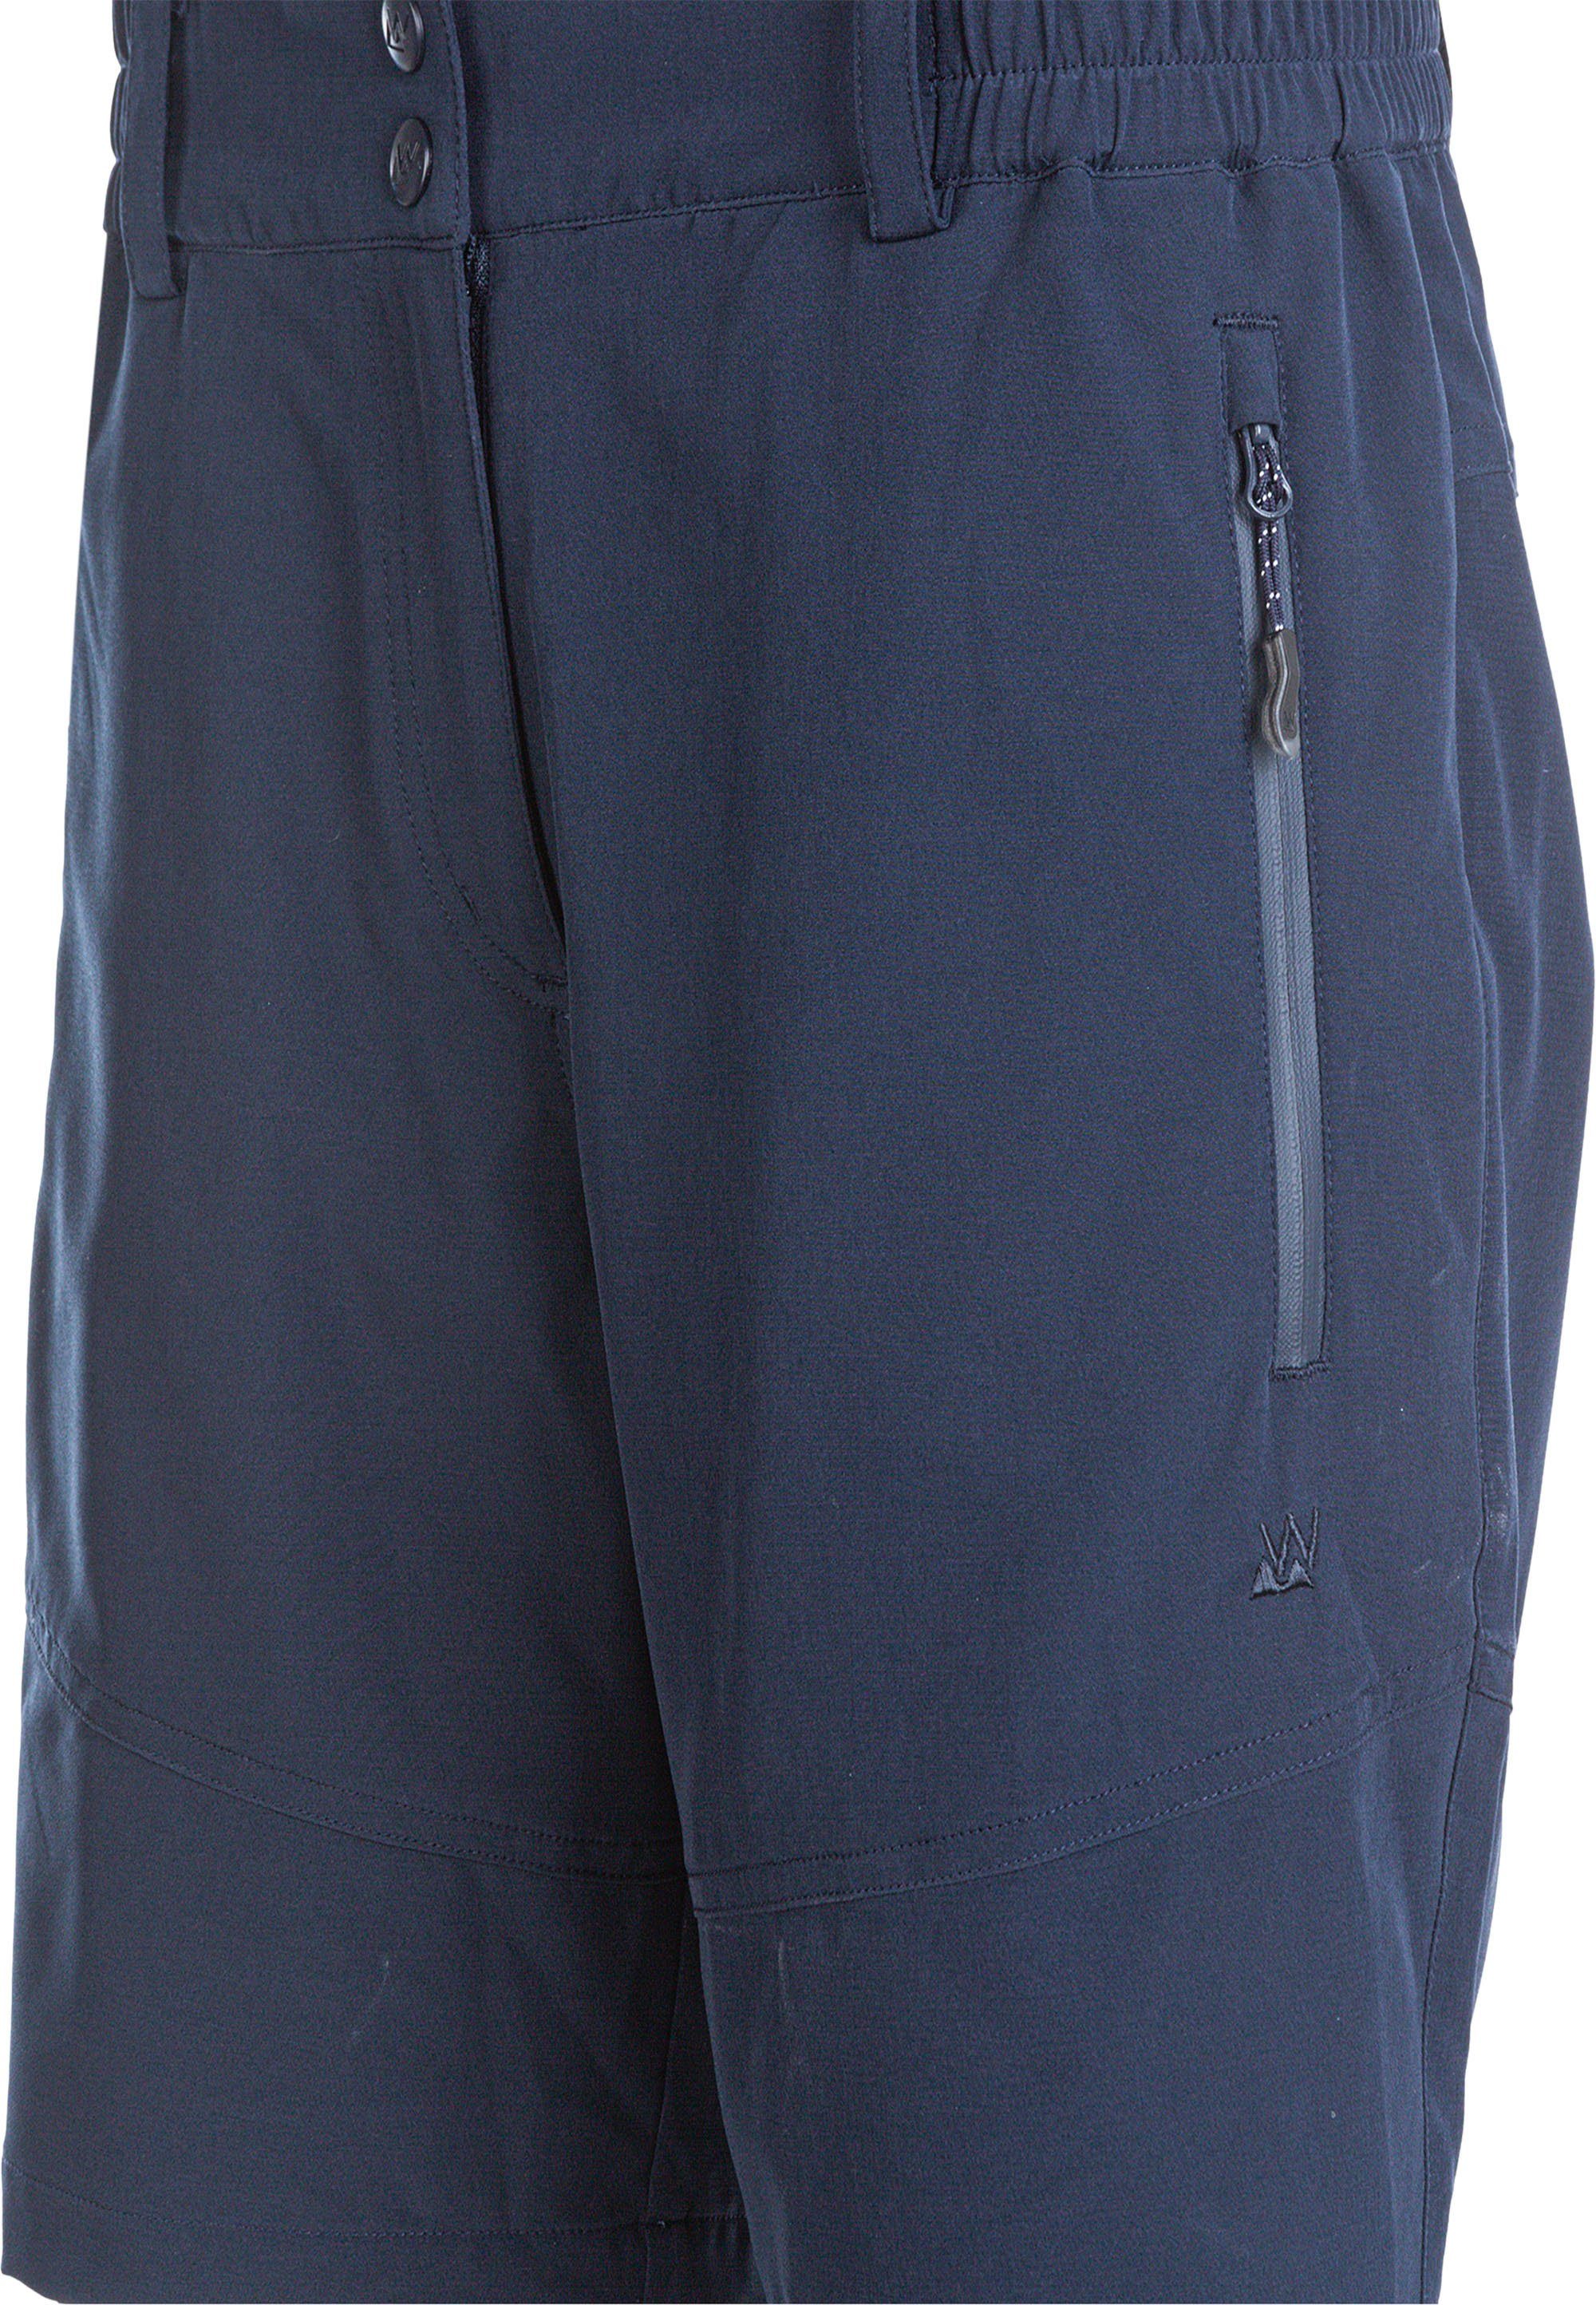 WHISTLER Shorts mit Funktionsstretch extra LALA dunkelblau komfortablem